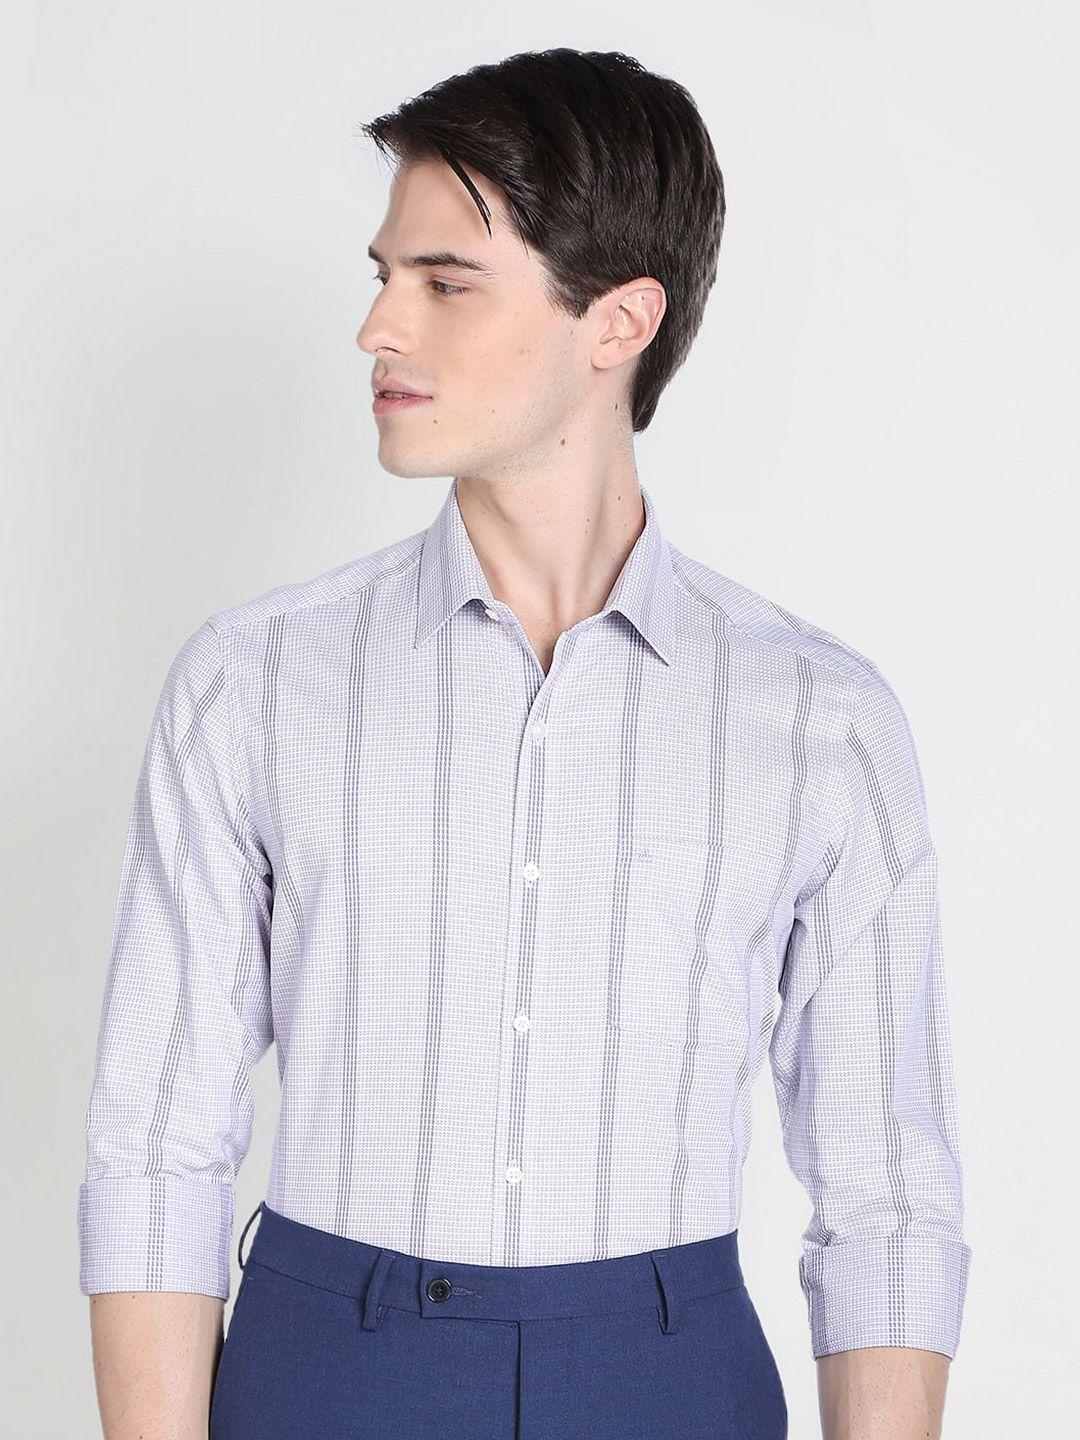 arrow striped pure cotton slim fit formal shirt